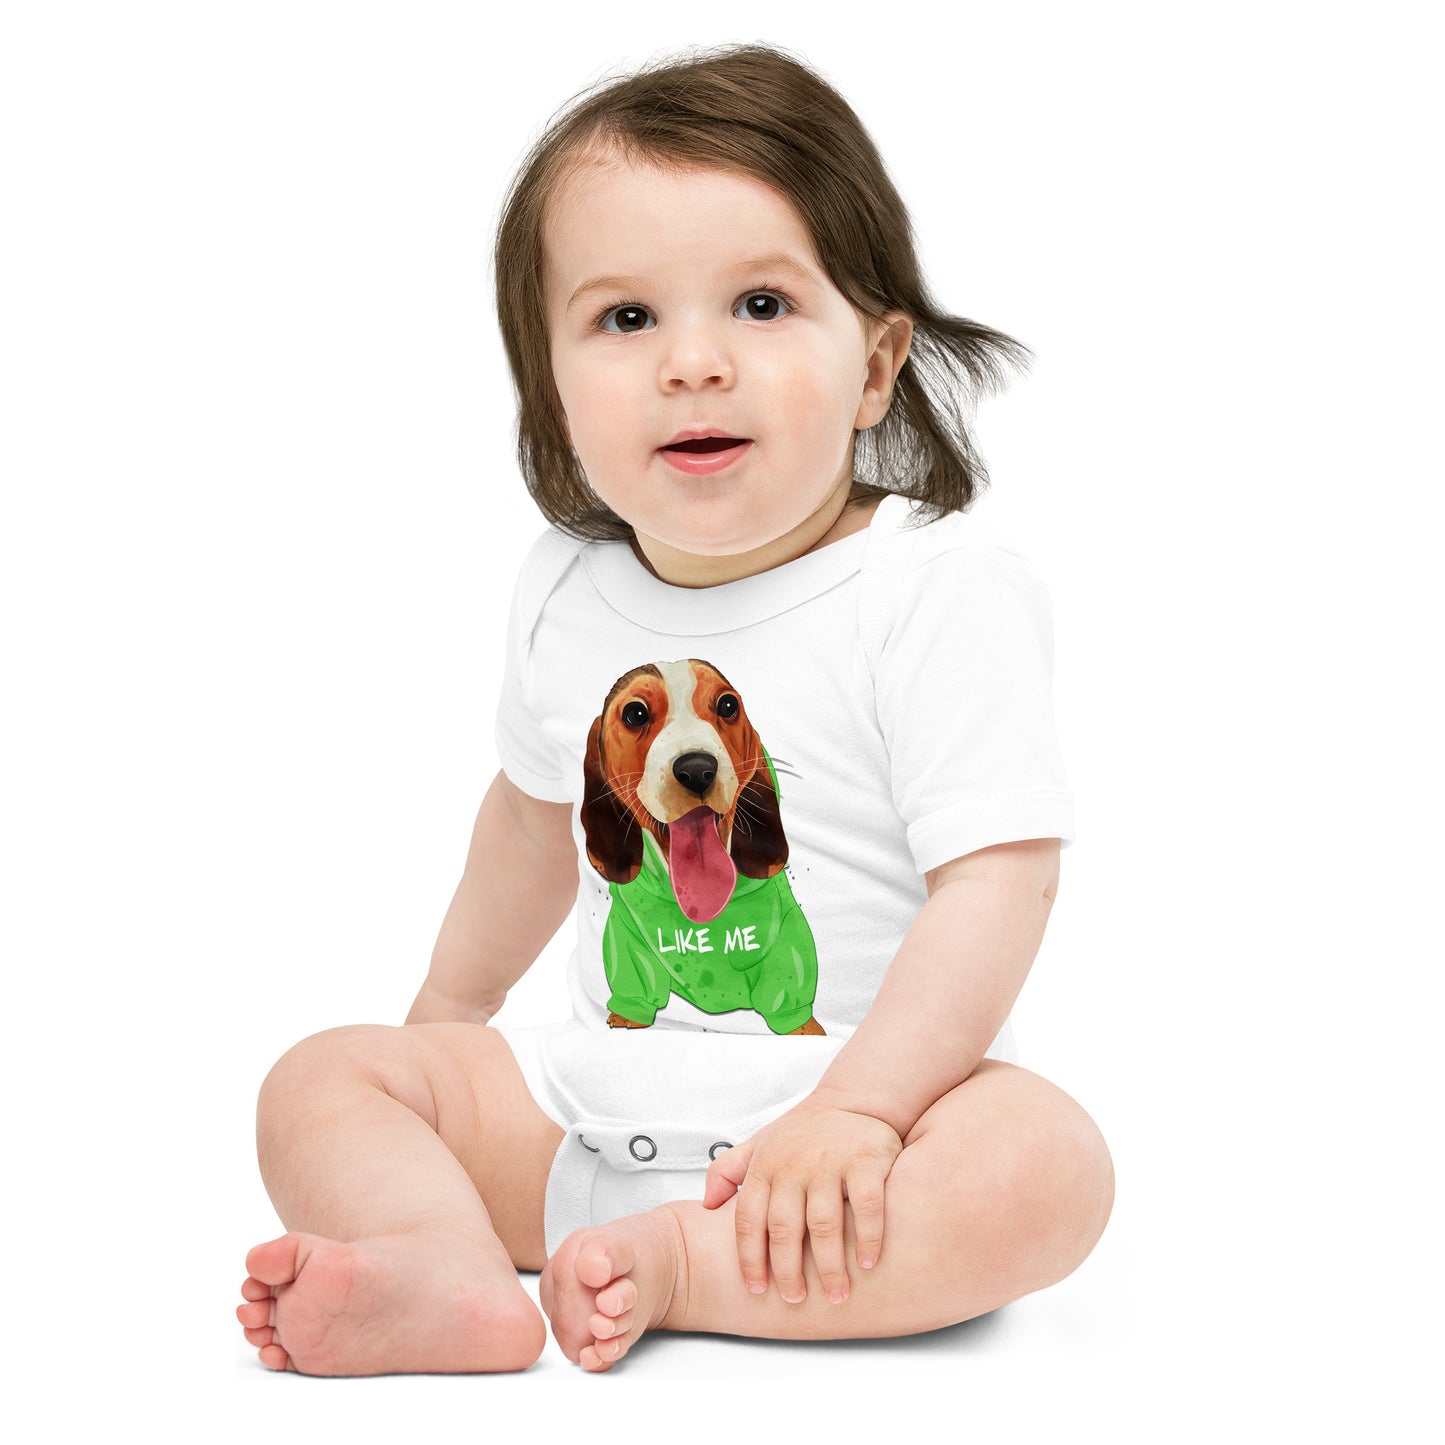 Cute Beagle Puppy Dog Bodysuit, No. 0280